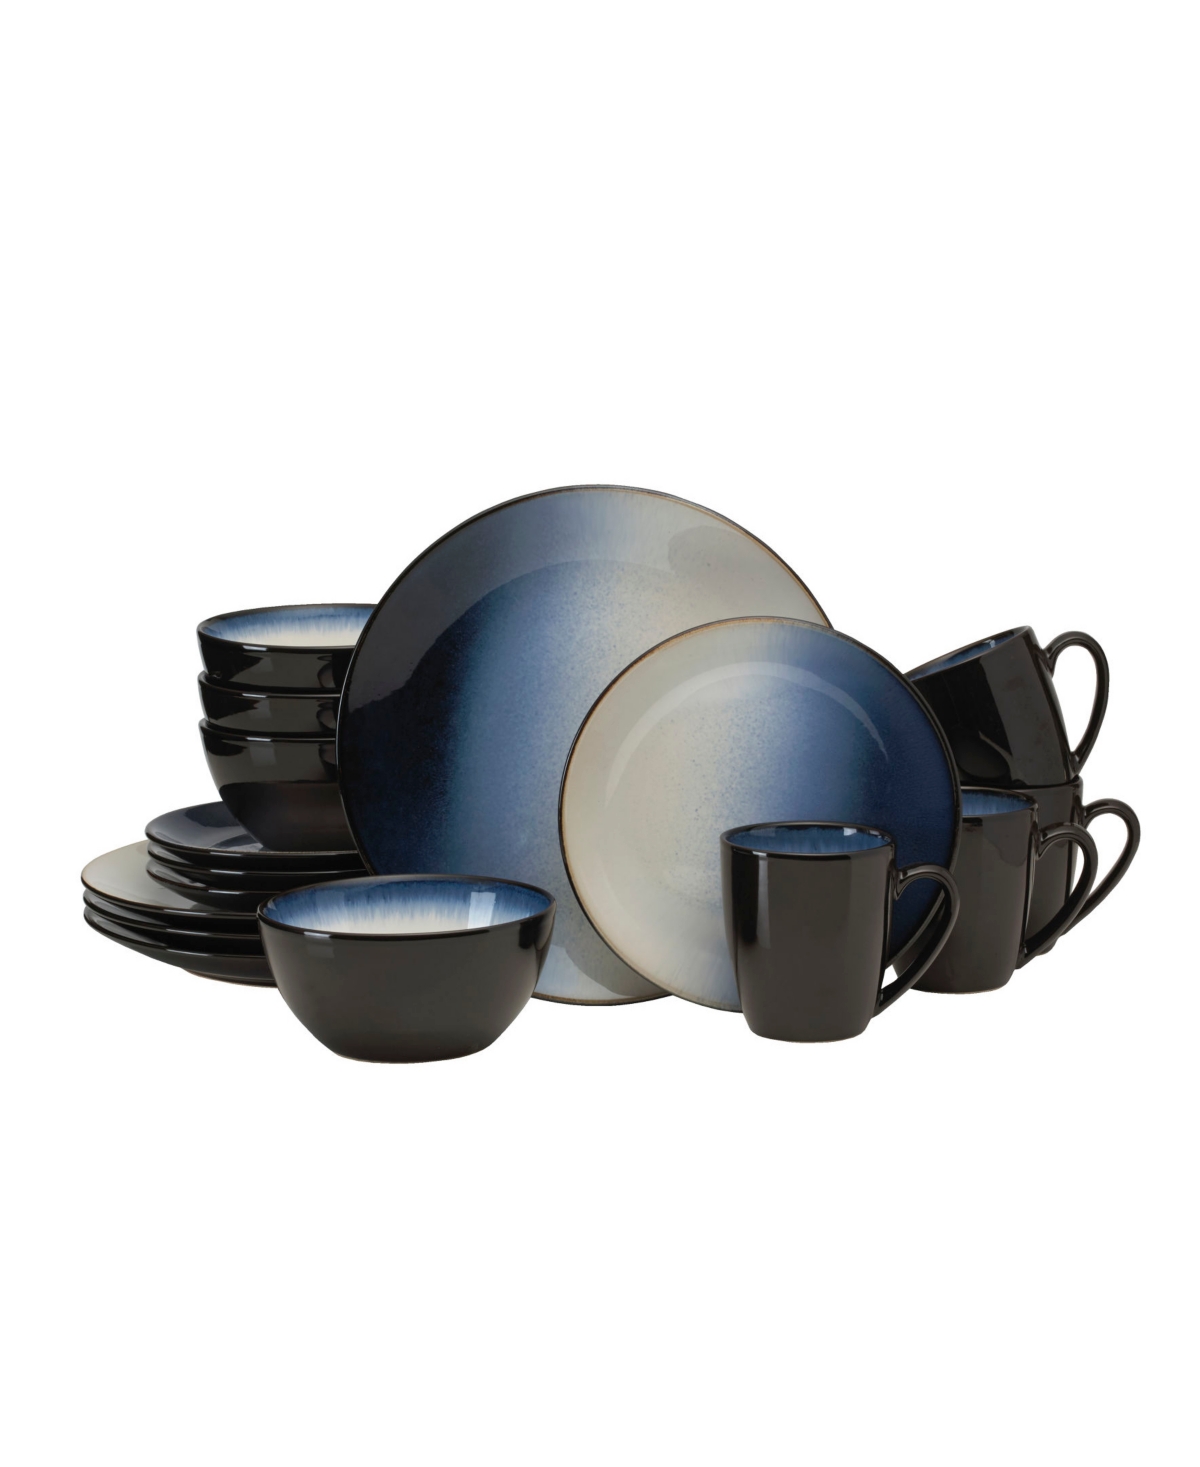 Gourmet Basics by Mikasa asher blue 16 pc dinnerware set, service for 4 - Blue